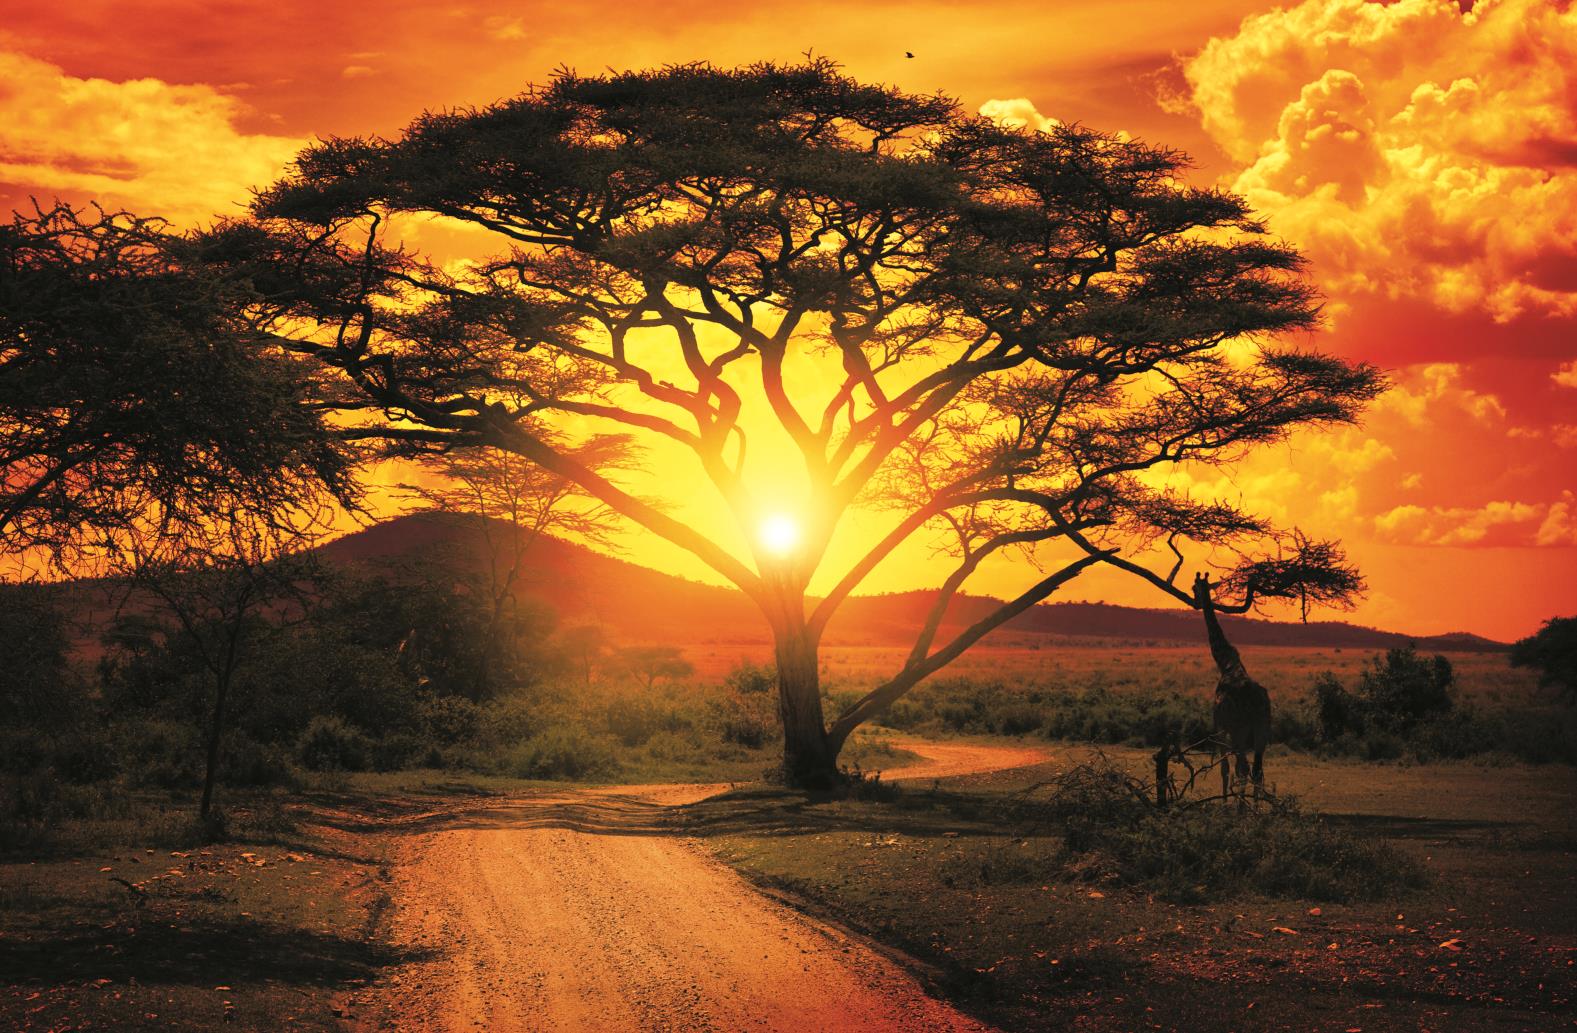 African Sunset Bright Photo Wallpaper Wall Mural Cn 400p